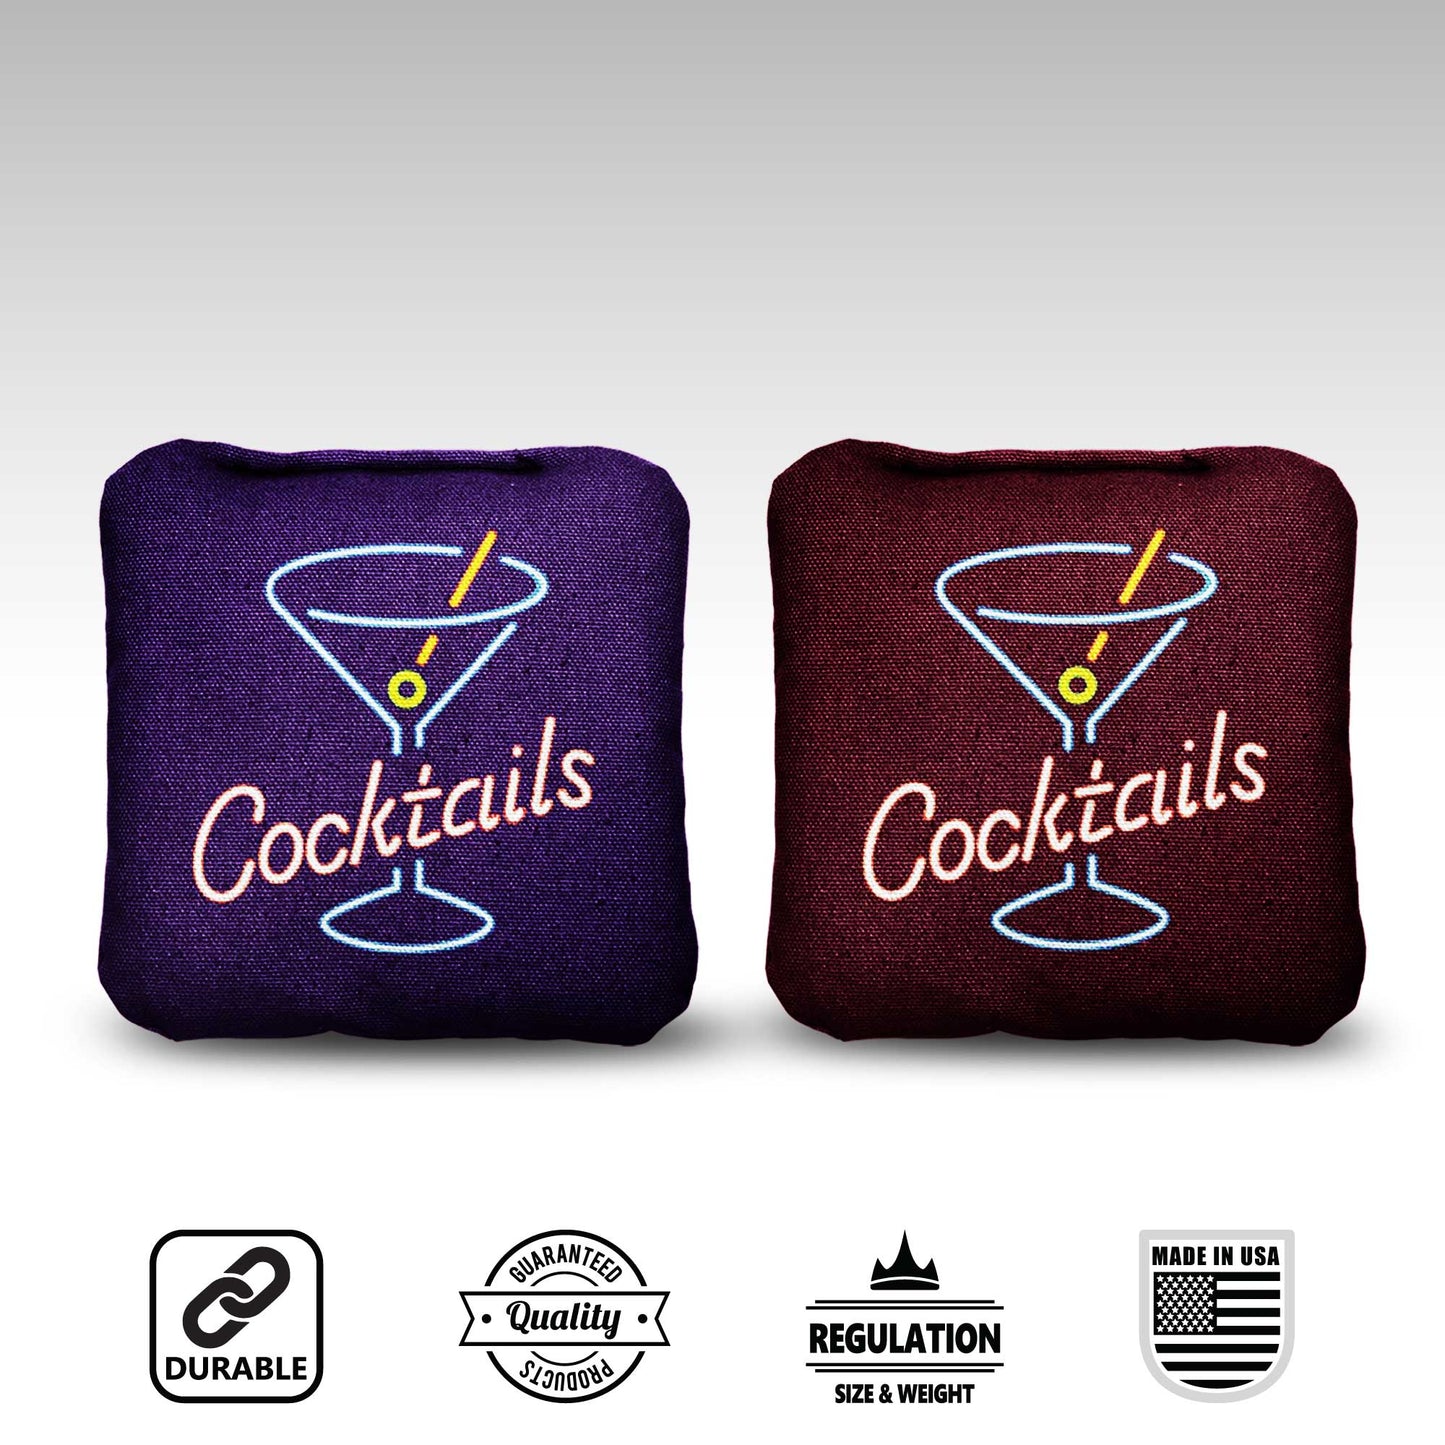 The Neon Cocktails - 8 Cornhole Bags